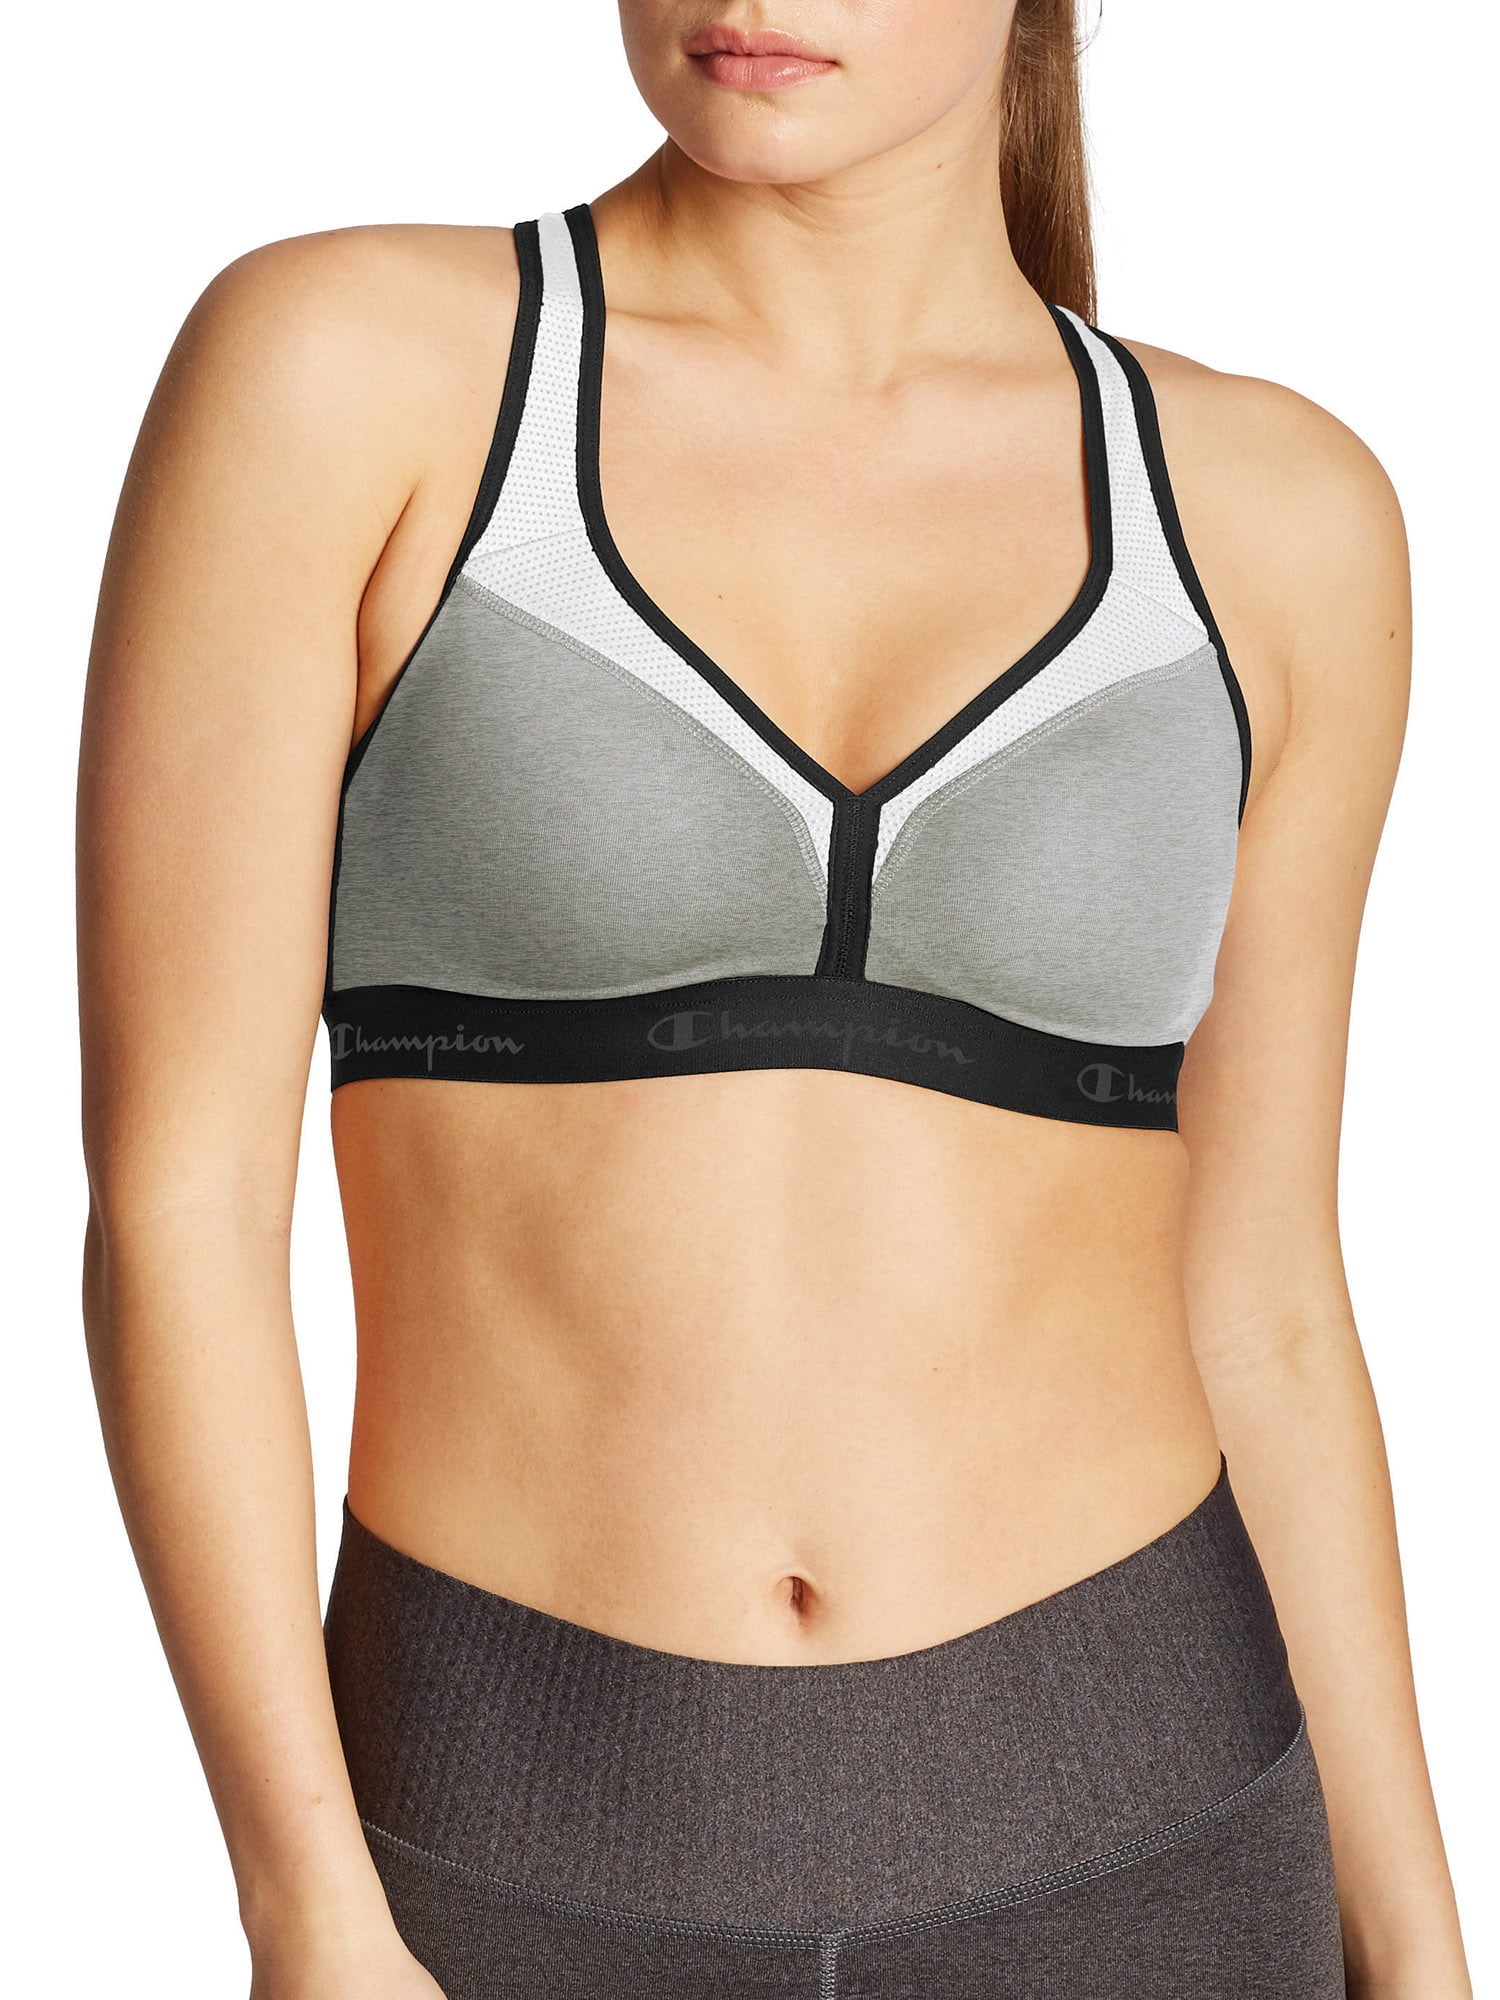 Champion sports bra size M RN# 15763 84% polyester 16% spandex